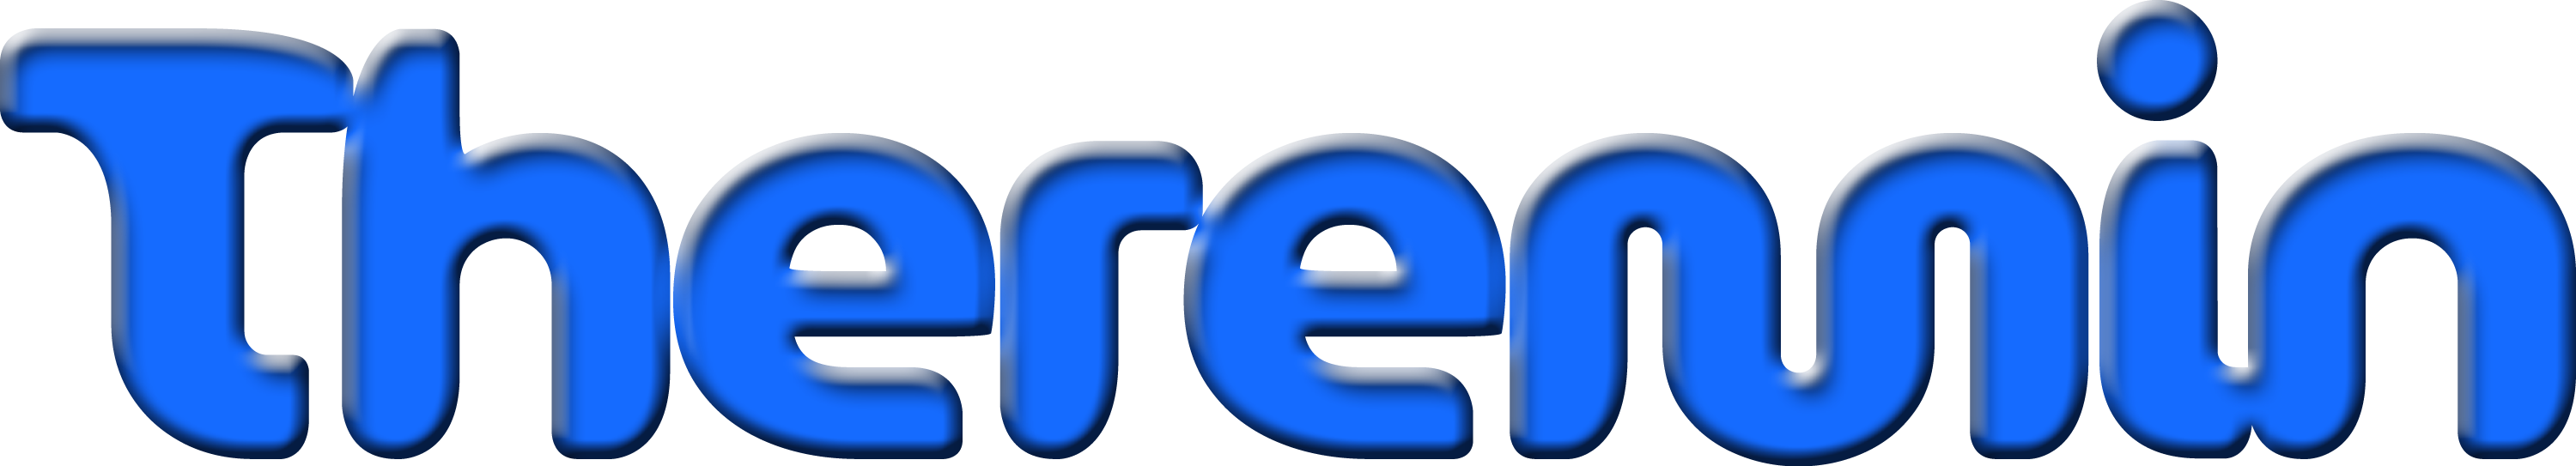 Theremin logo